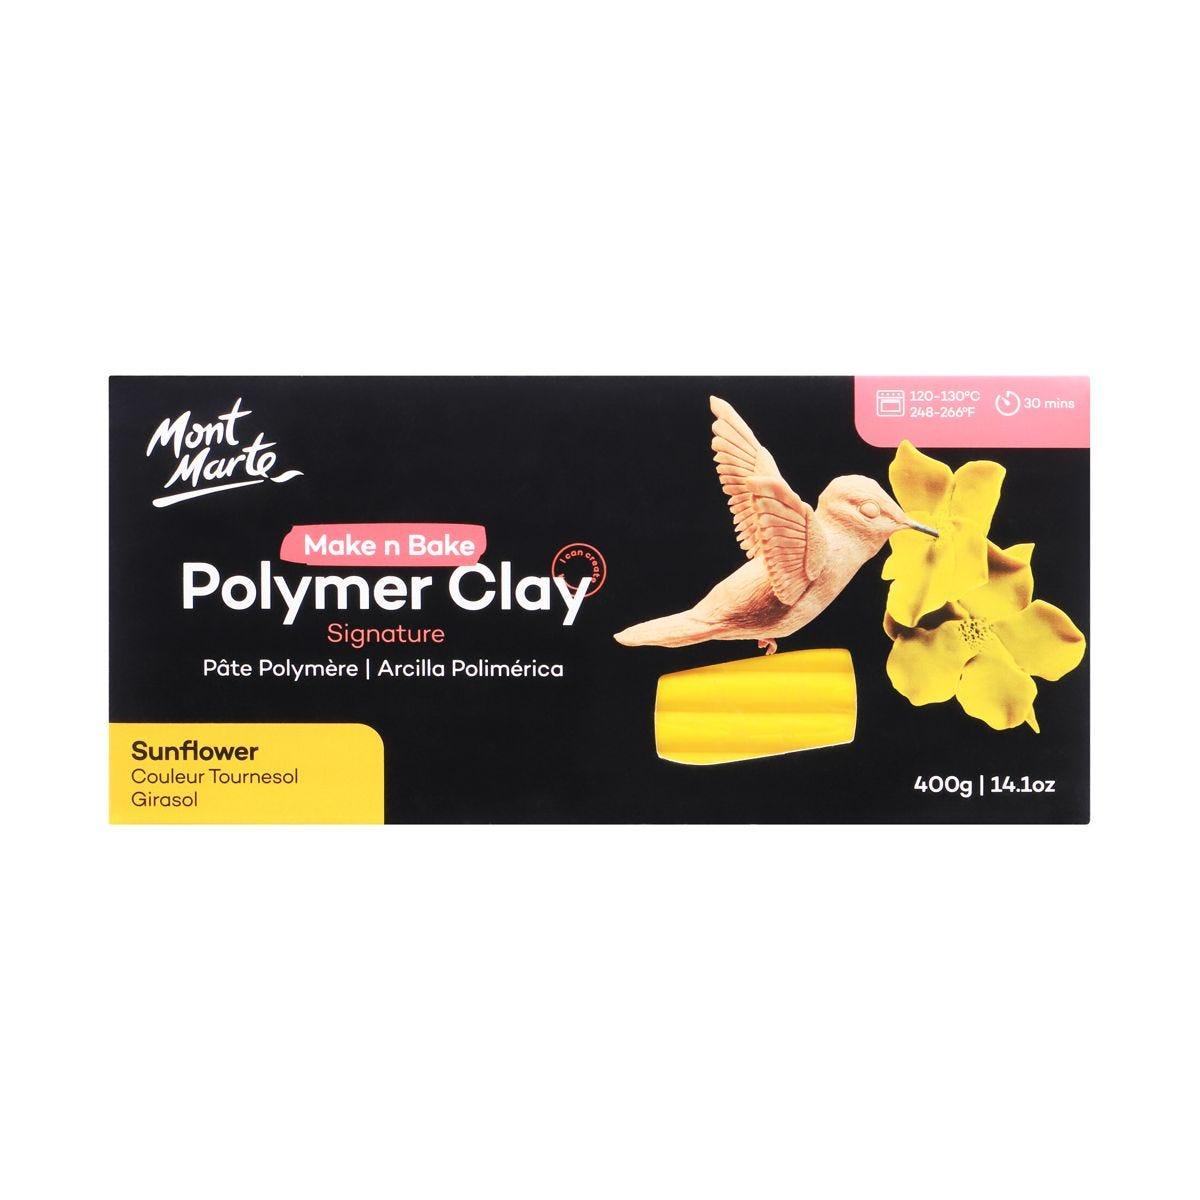 Make n Bake Polymer Clay Signature 400g (14.1oz) - Sunflower Mont Marte - Glowish